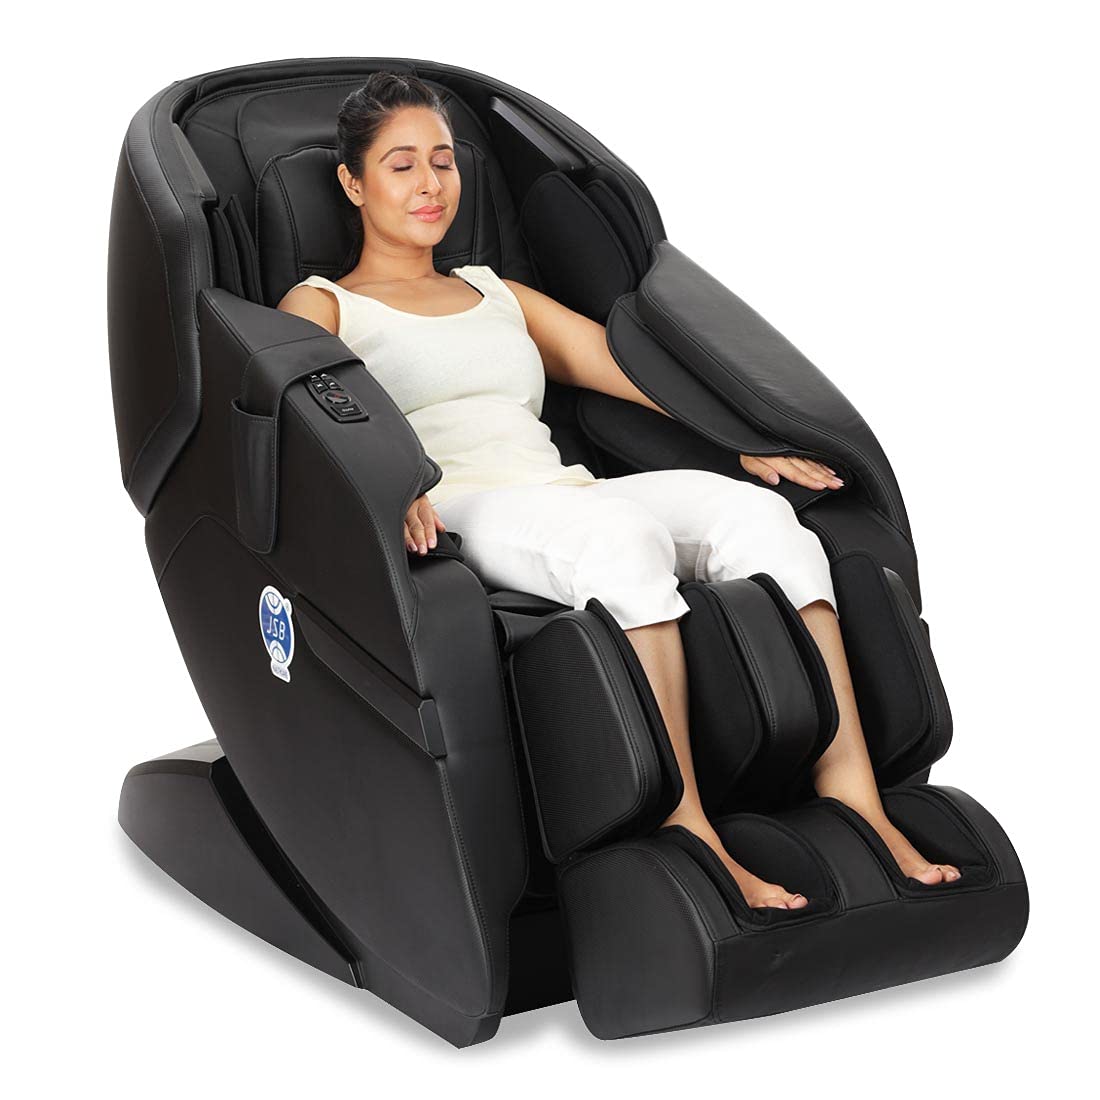 Zero gravity massage chair in India